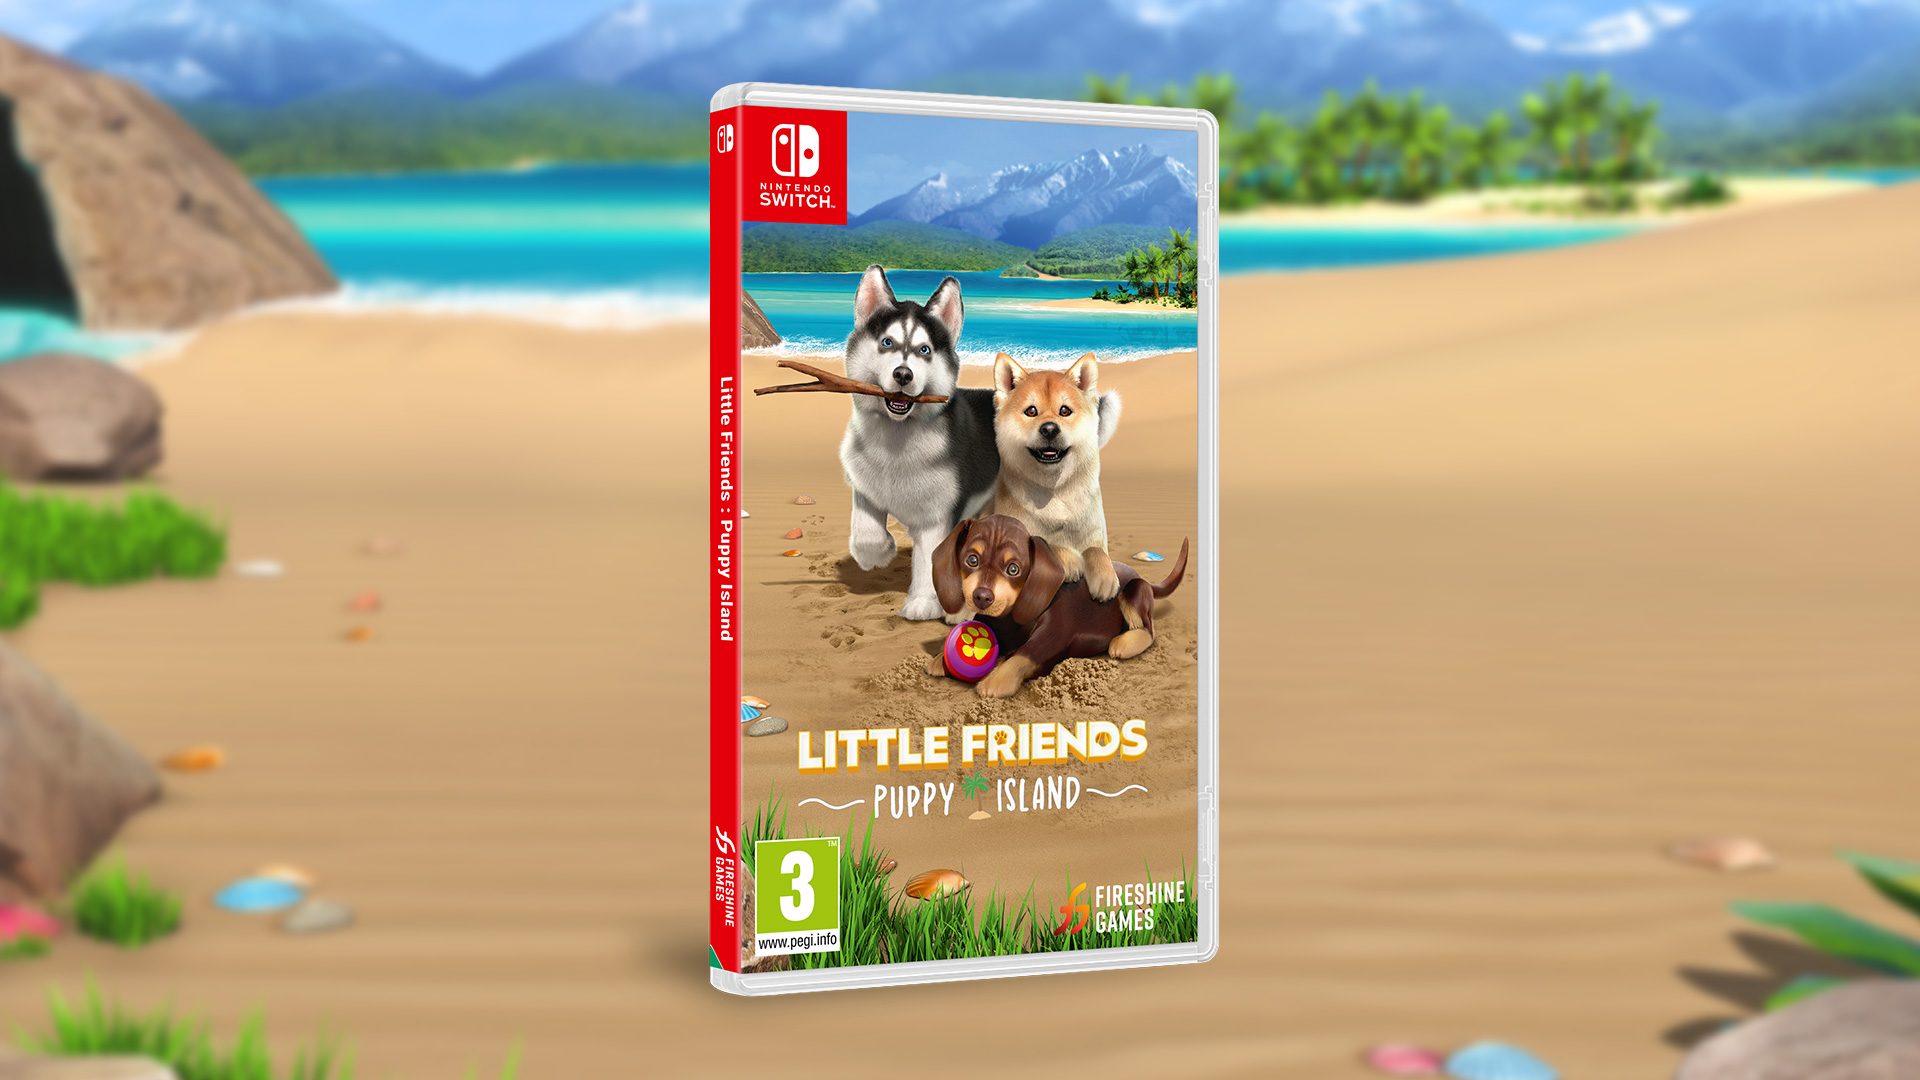 Little Friends: Puppy Island - Nintendo Switch